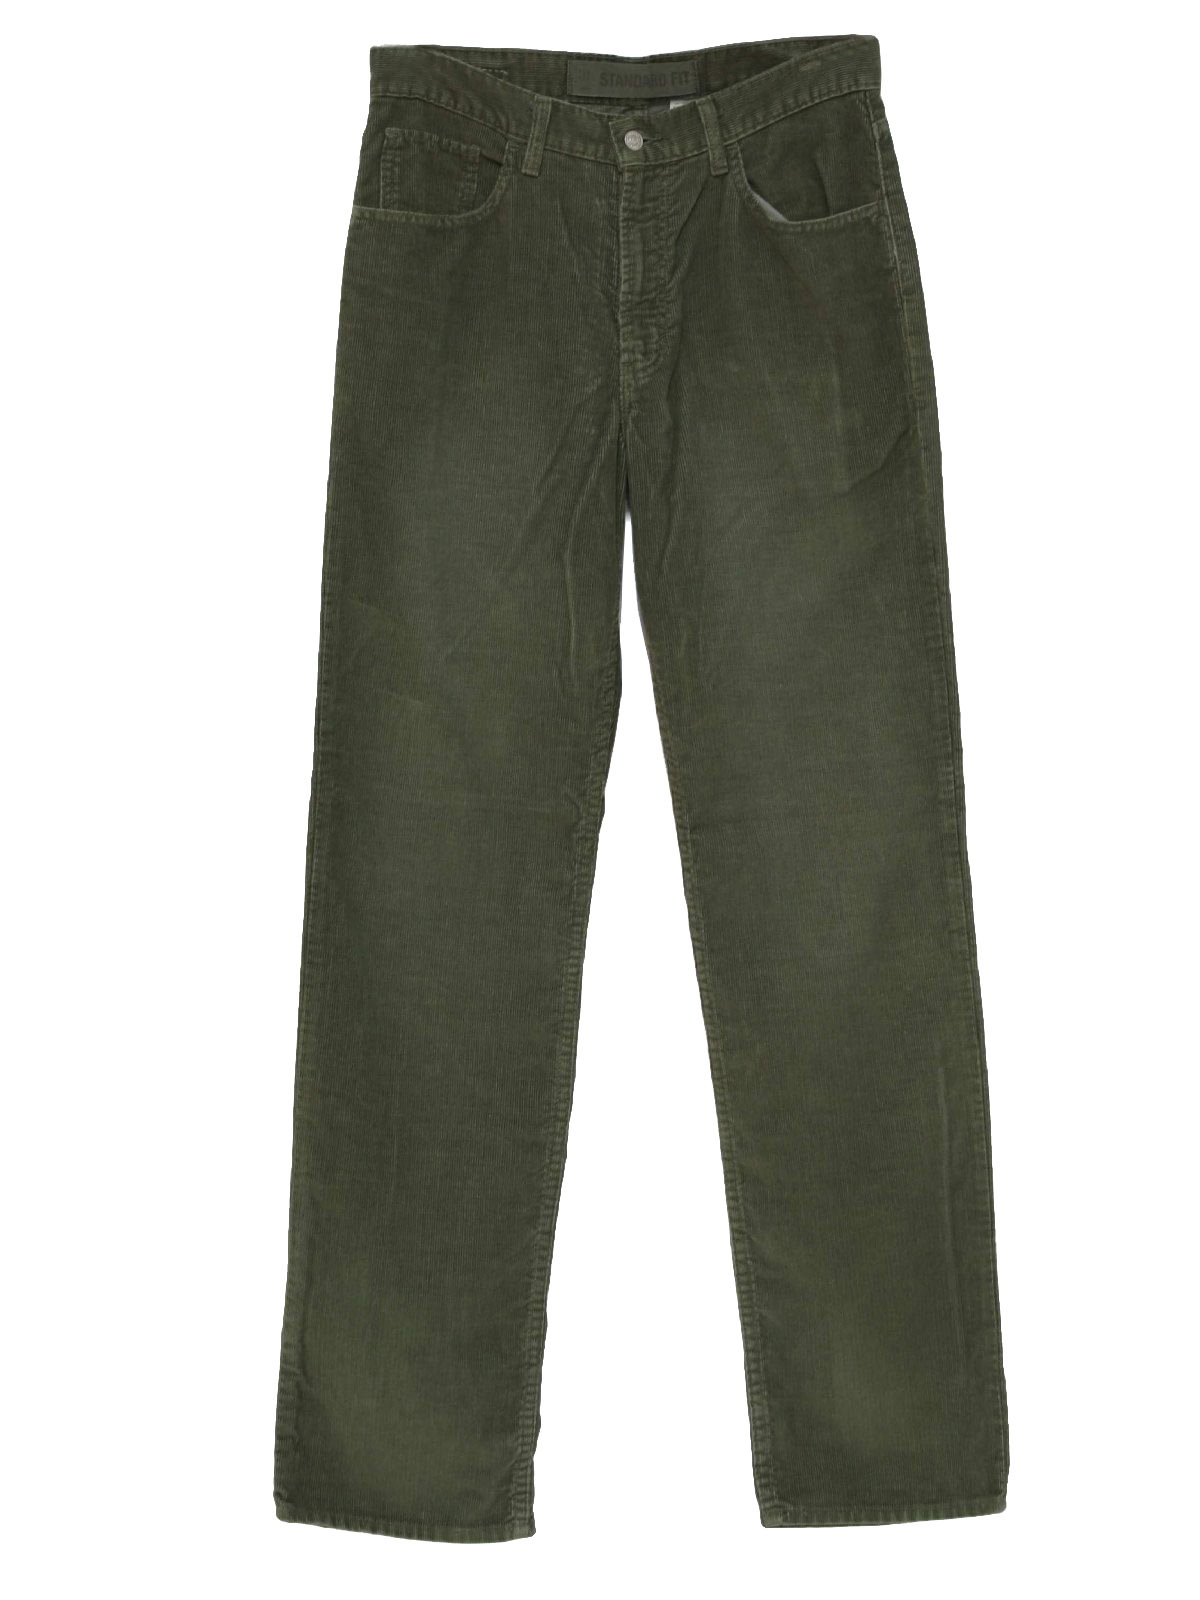 90's The Gap Pants: 90s -The Gap- Mens moss green pinwale cotton ...